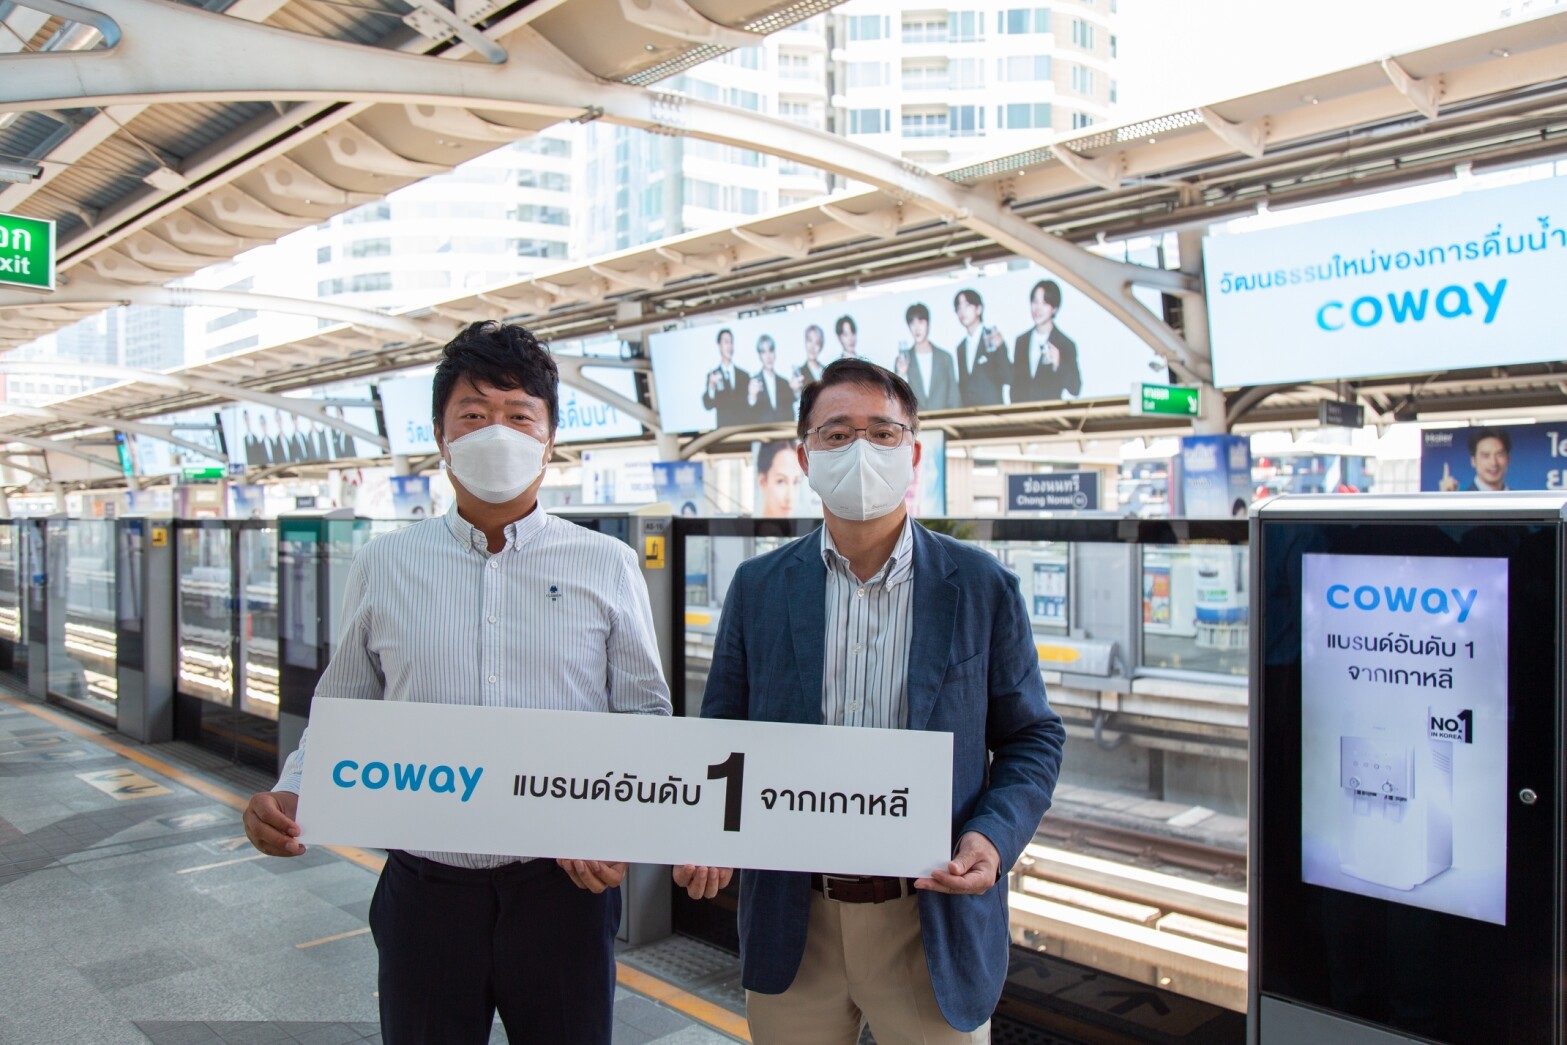 COWAY เปิดตัวแคมเปญ "O2O EXPERIENCE" ชูกลยุทธ์สุดว้าวเข้าถึงลูกค้าด้วยบูธโคเวย์ทั่วไทย